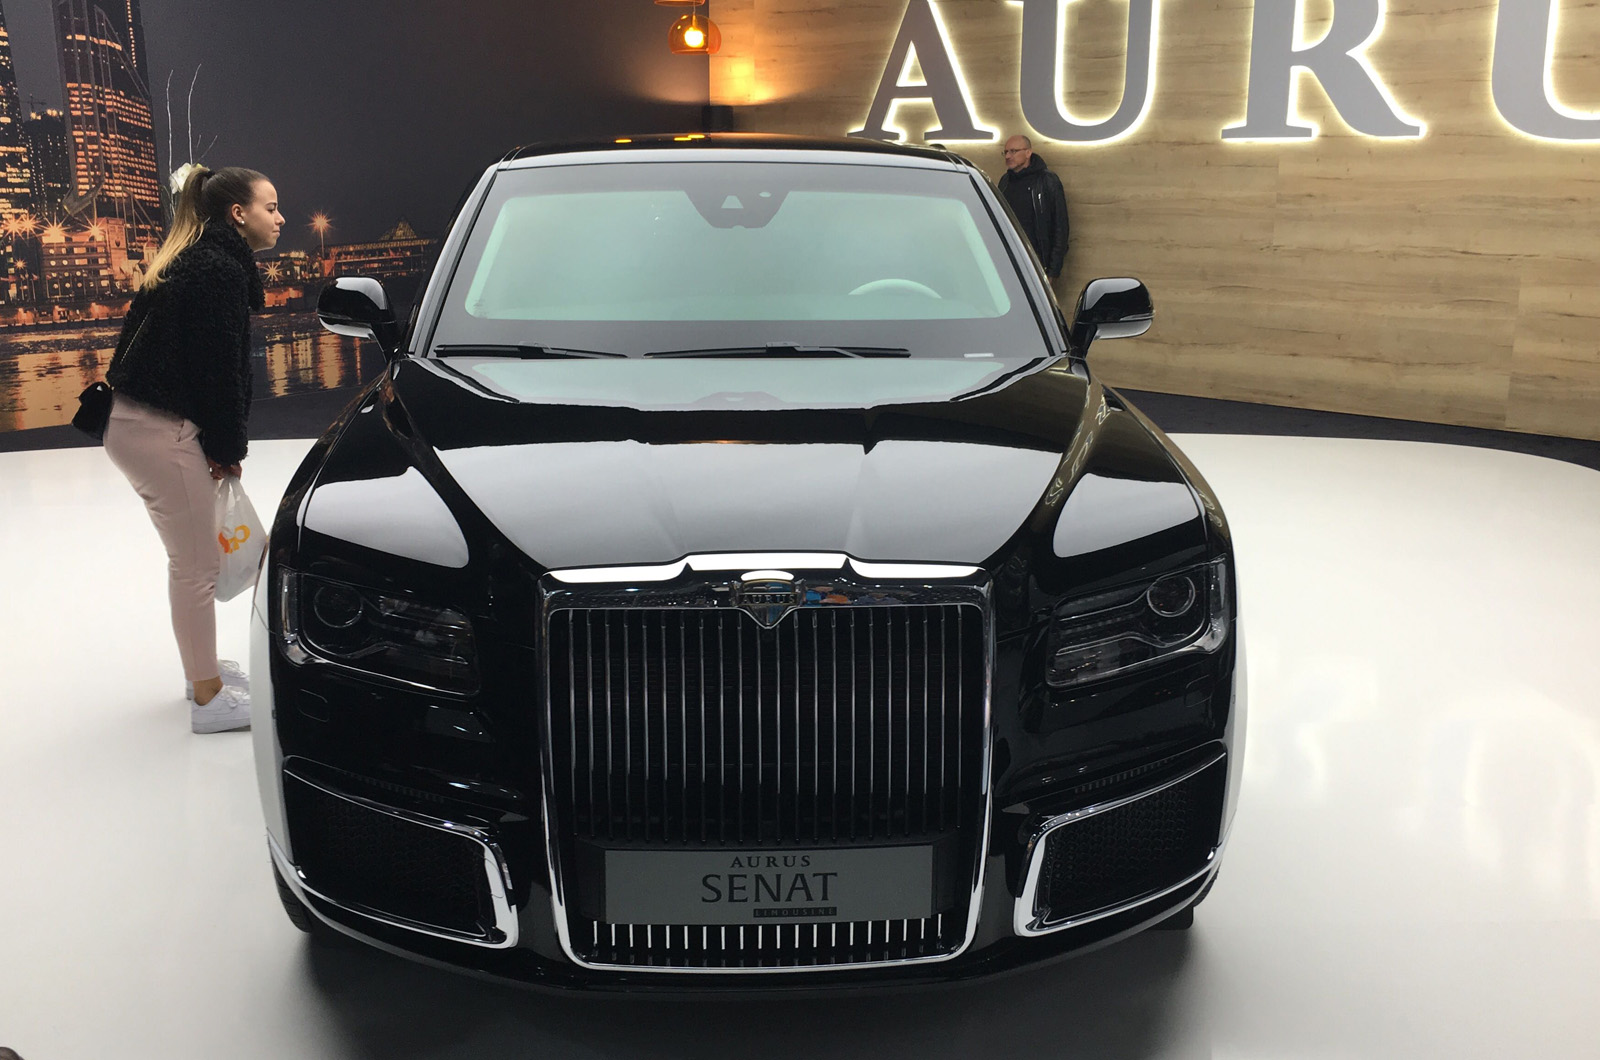 Aurus Senat: European debut for Russian limousine